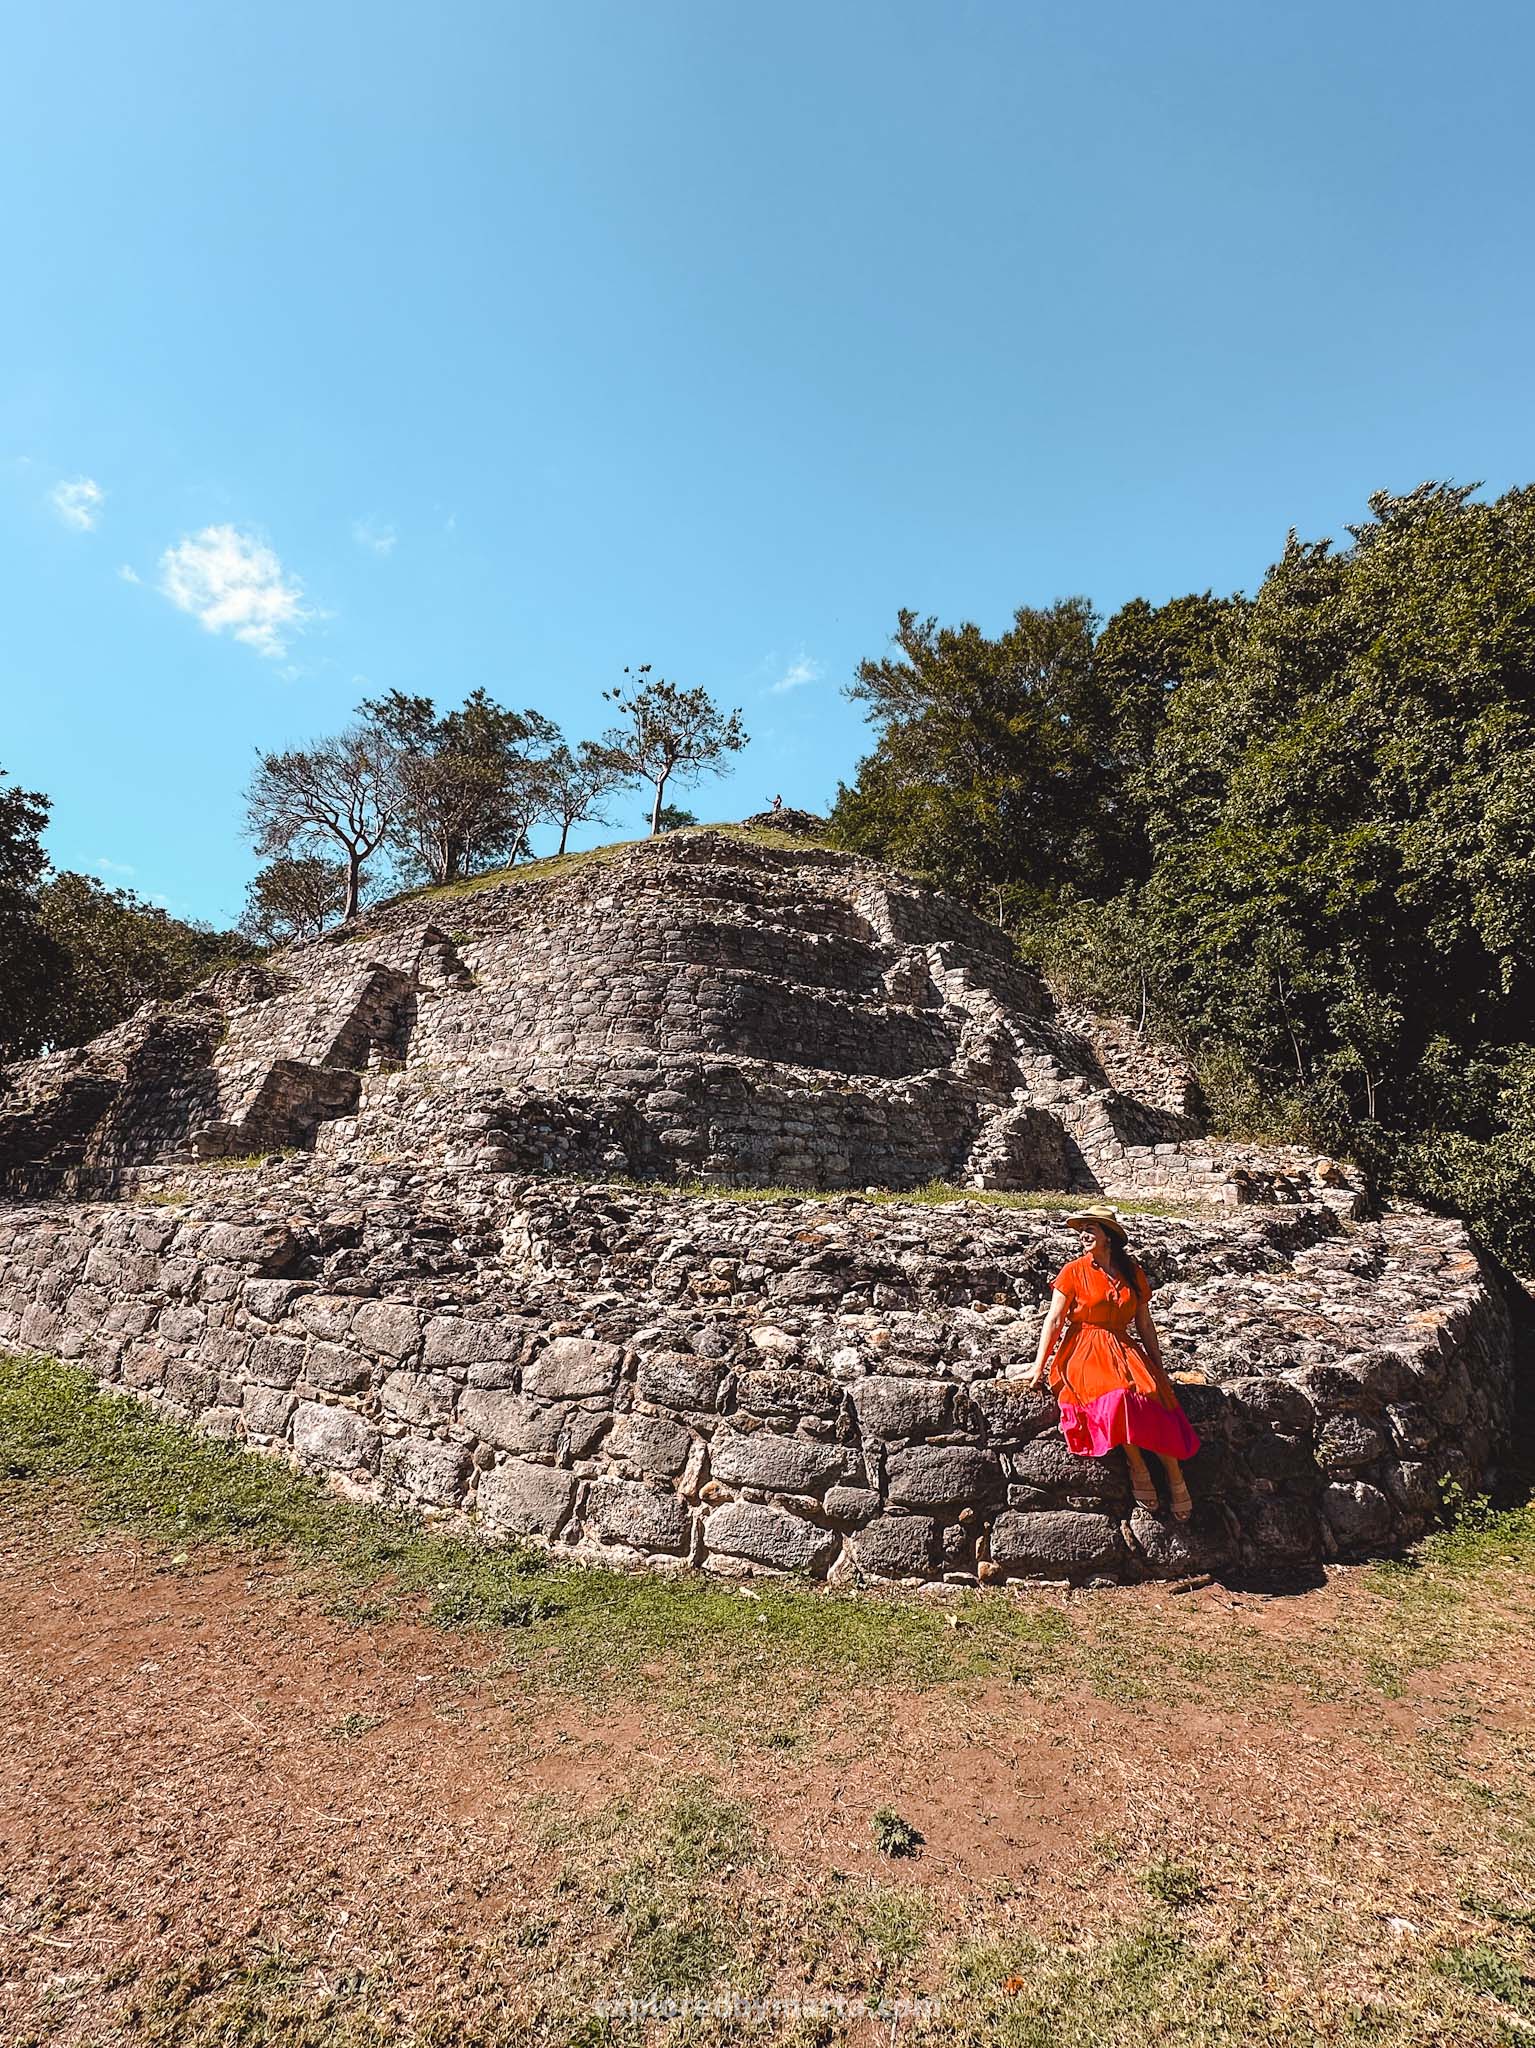 Izamal, Mexico-Itzamatul is a Mayan pyramid in the yellow town of Izamal said to be built for the Mayan god Zamna